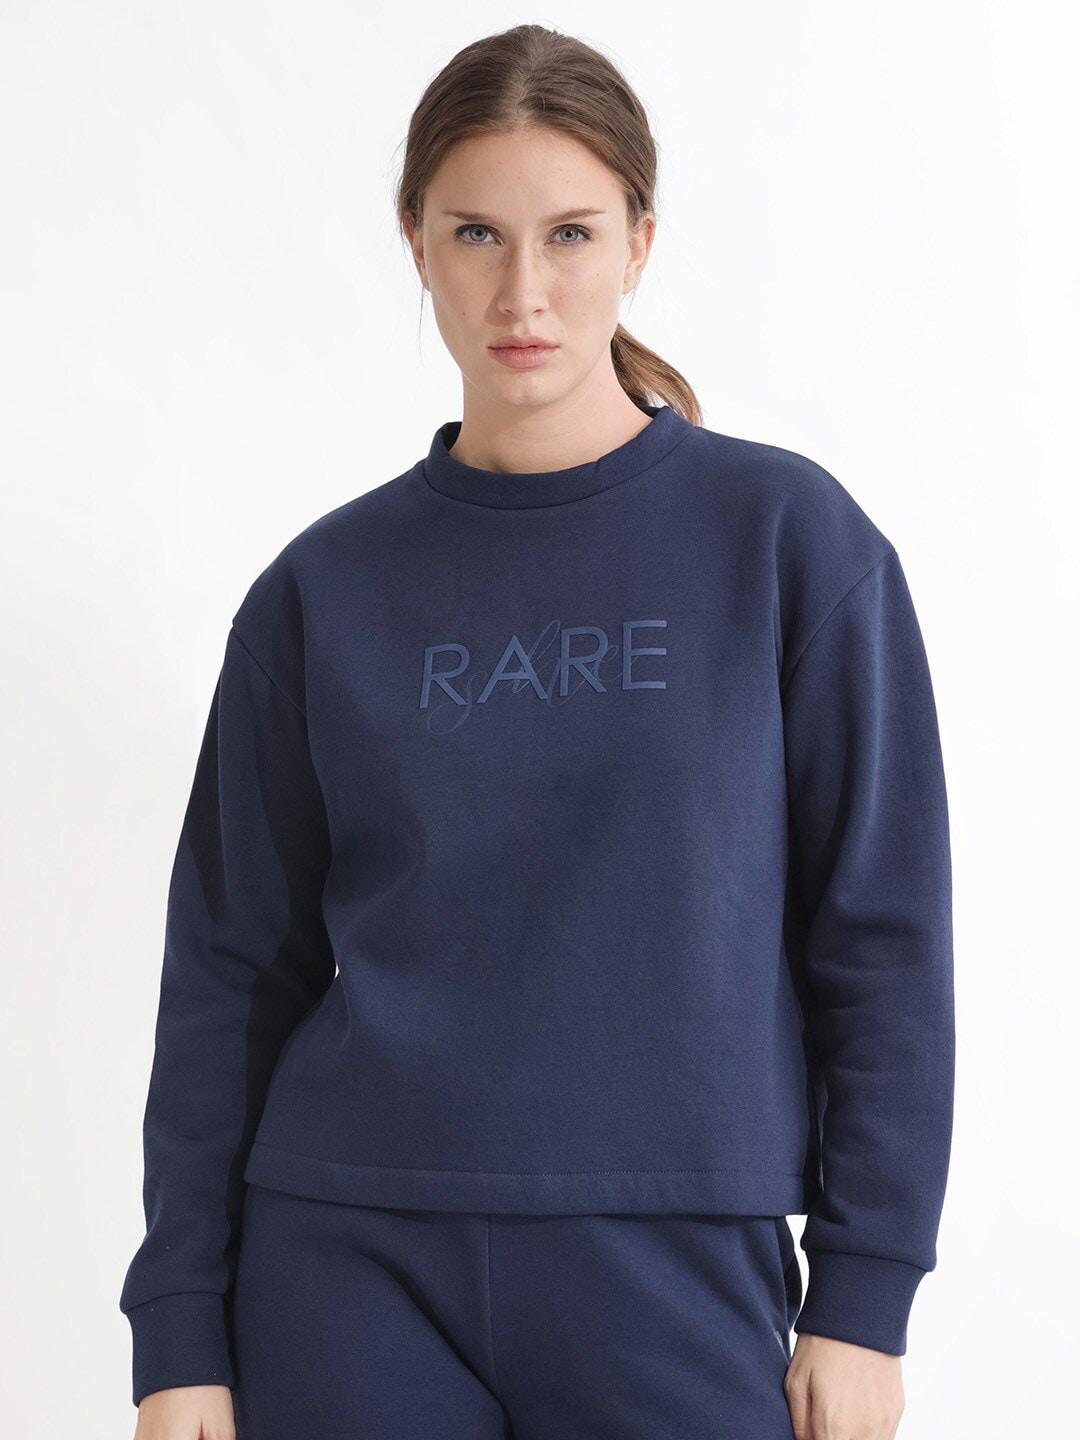 rareism brand logo printed cotton sweatshirt